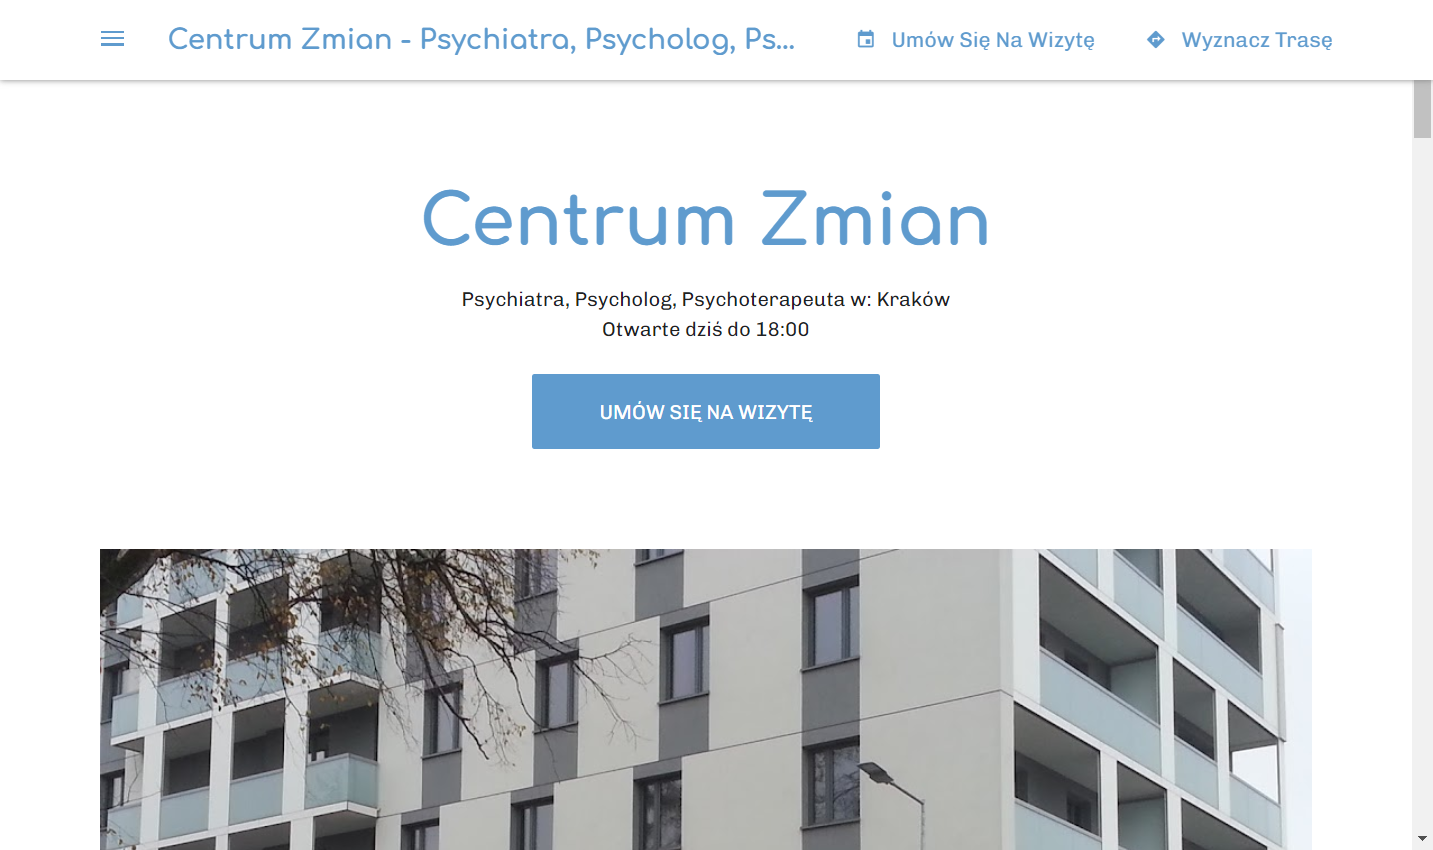 Centrum Zmian - Psychiatra, Psycholog, Psychoterapeuta.